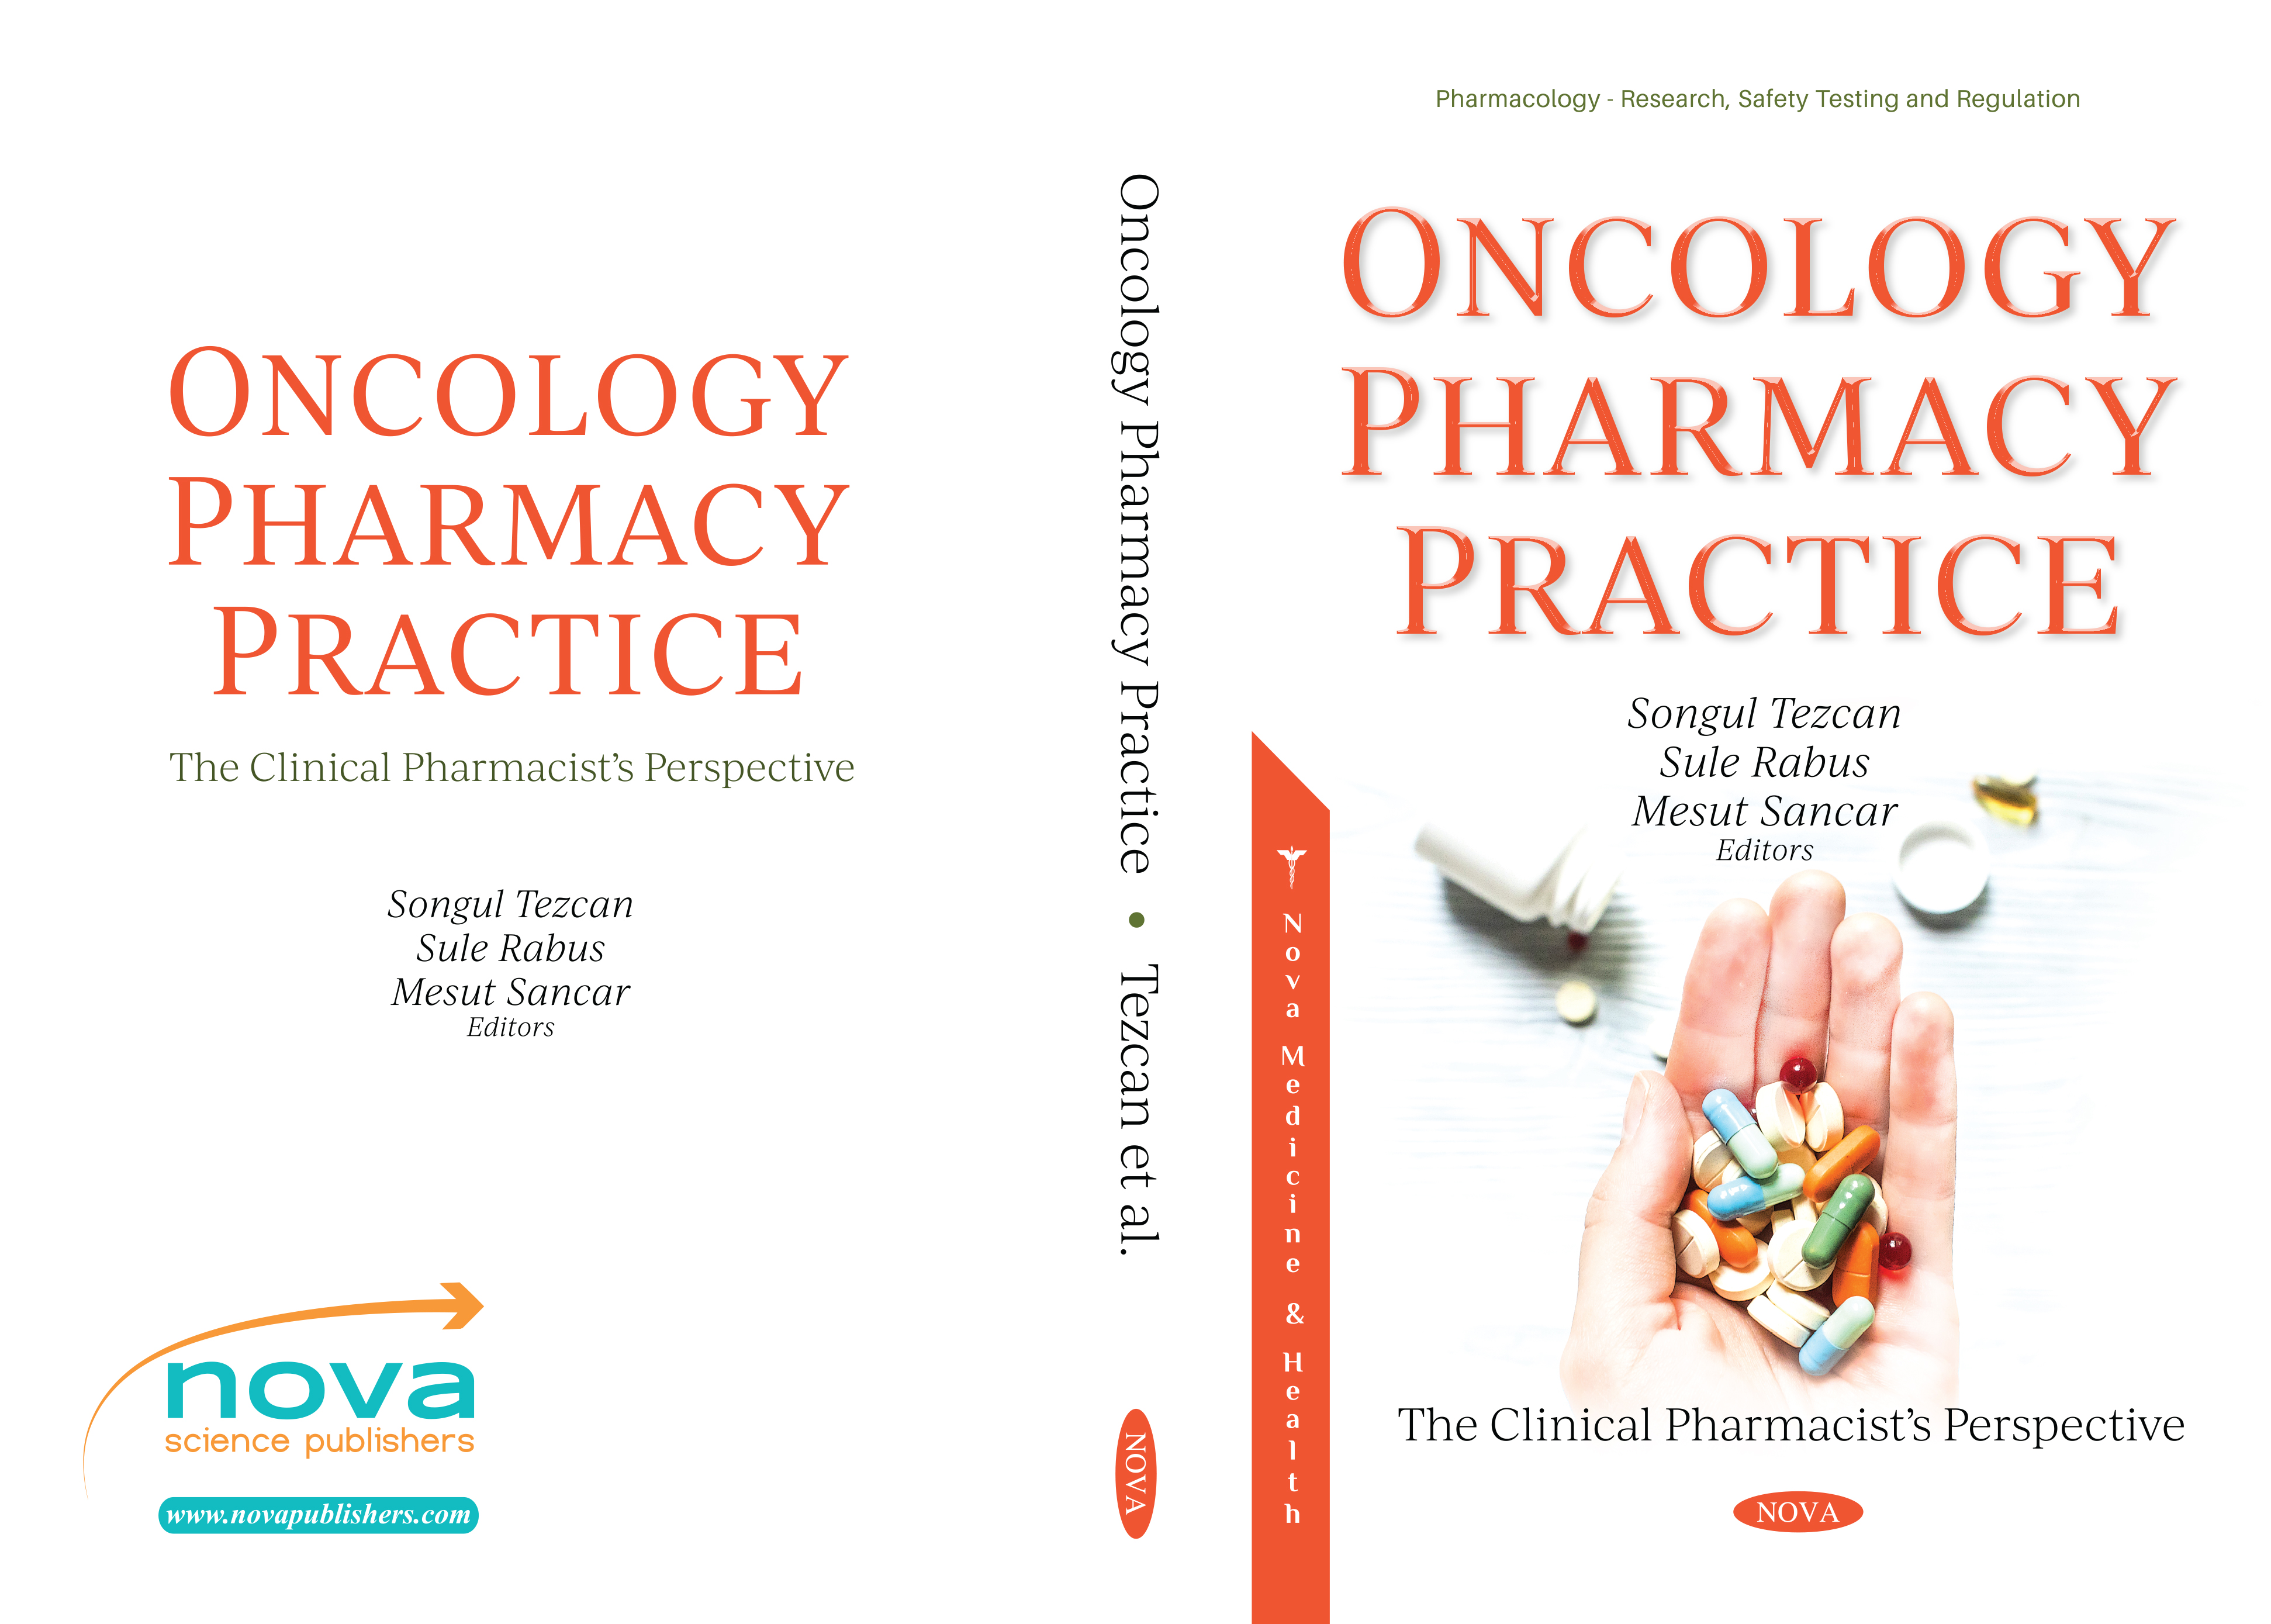 Oncology Pharmacy Practice 978-1-53619-564-4 (5).jpg (2.33 MB)